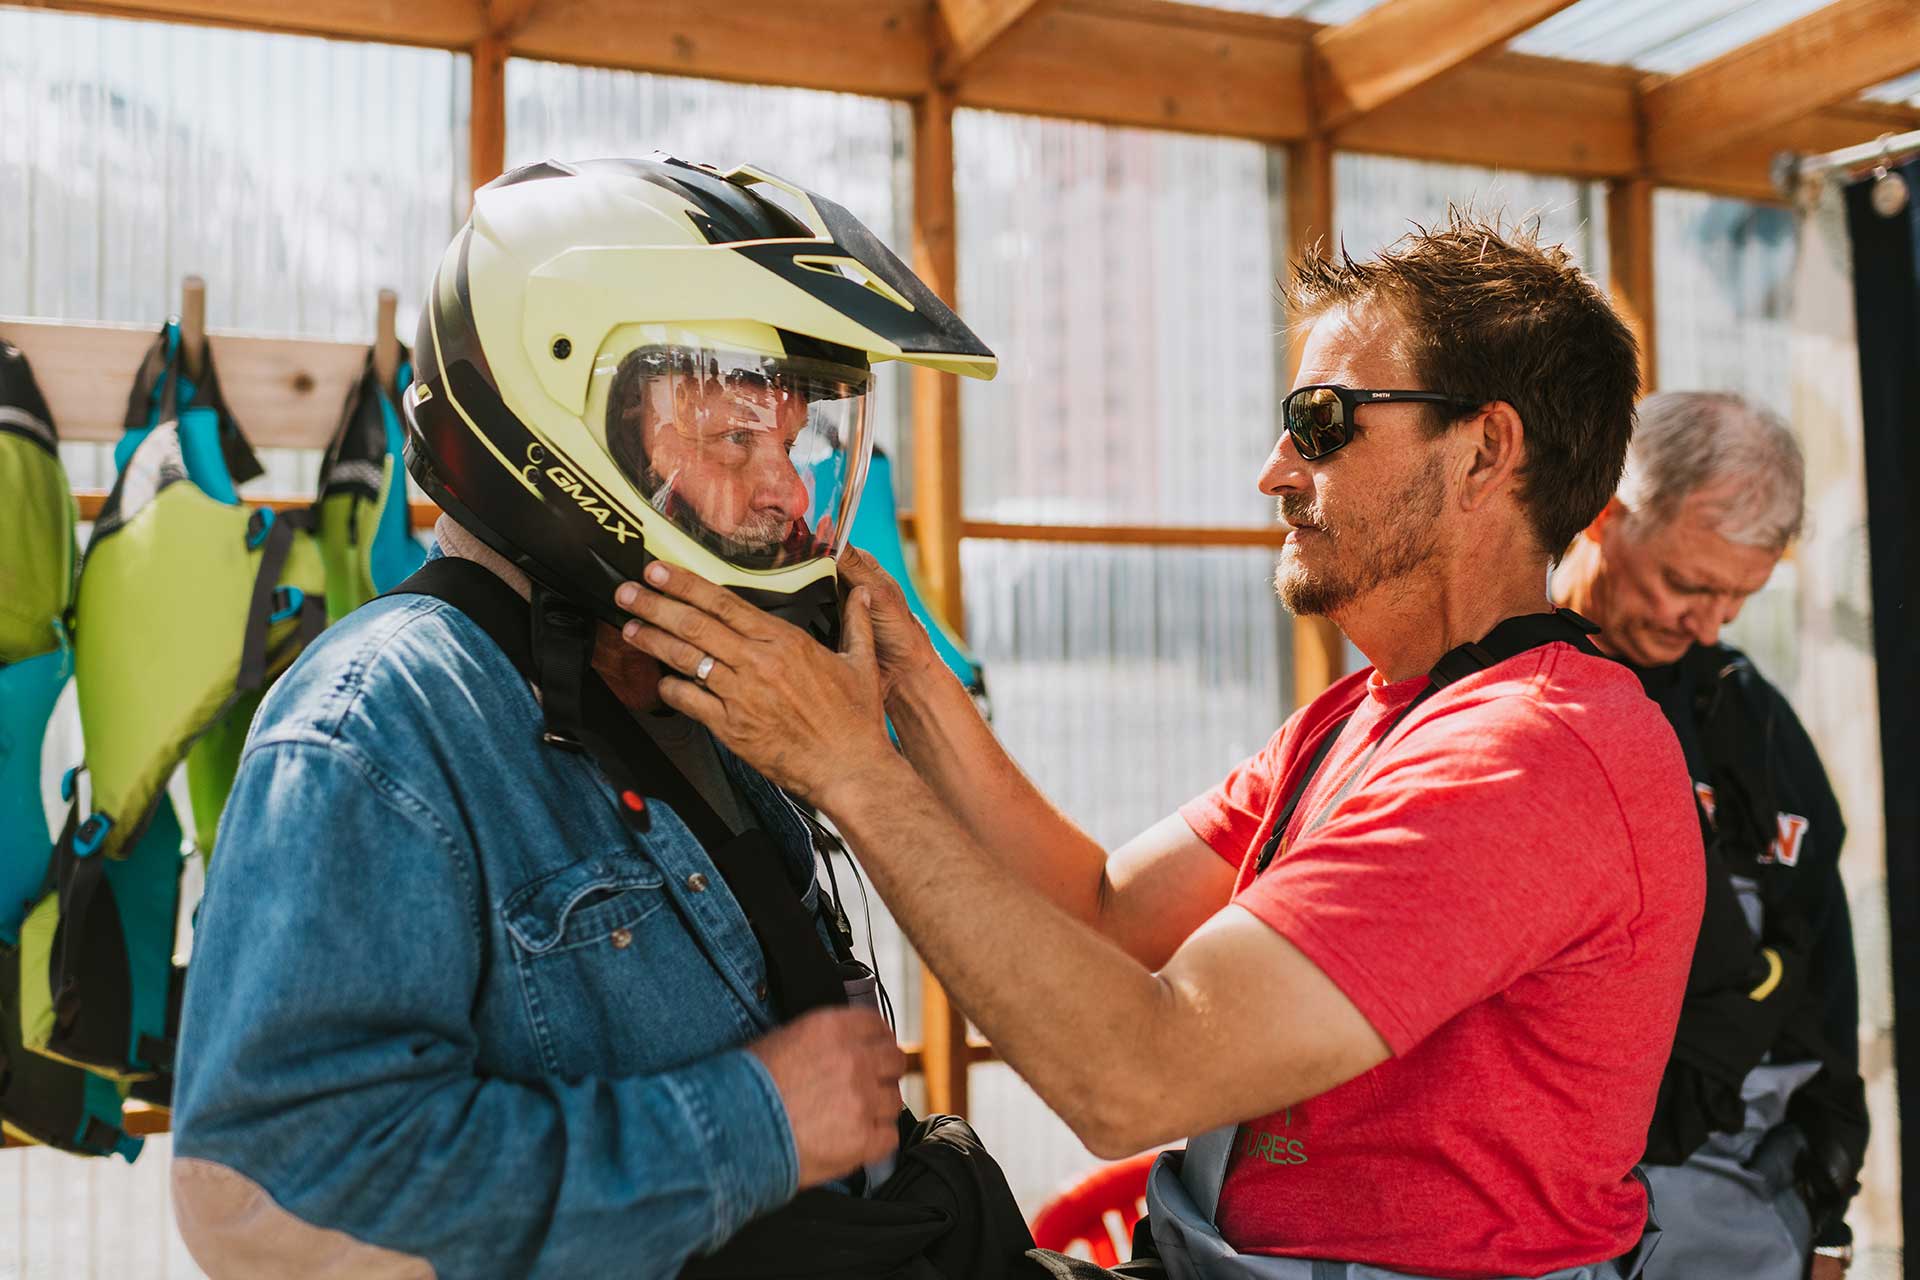 Jetski Tour Guide Fitting Customer with Helmet